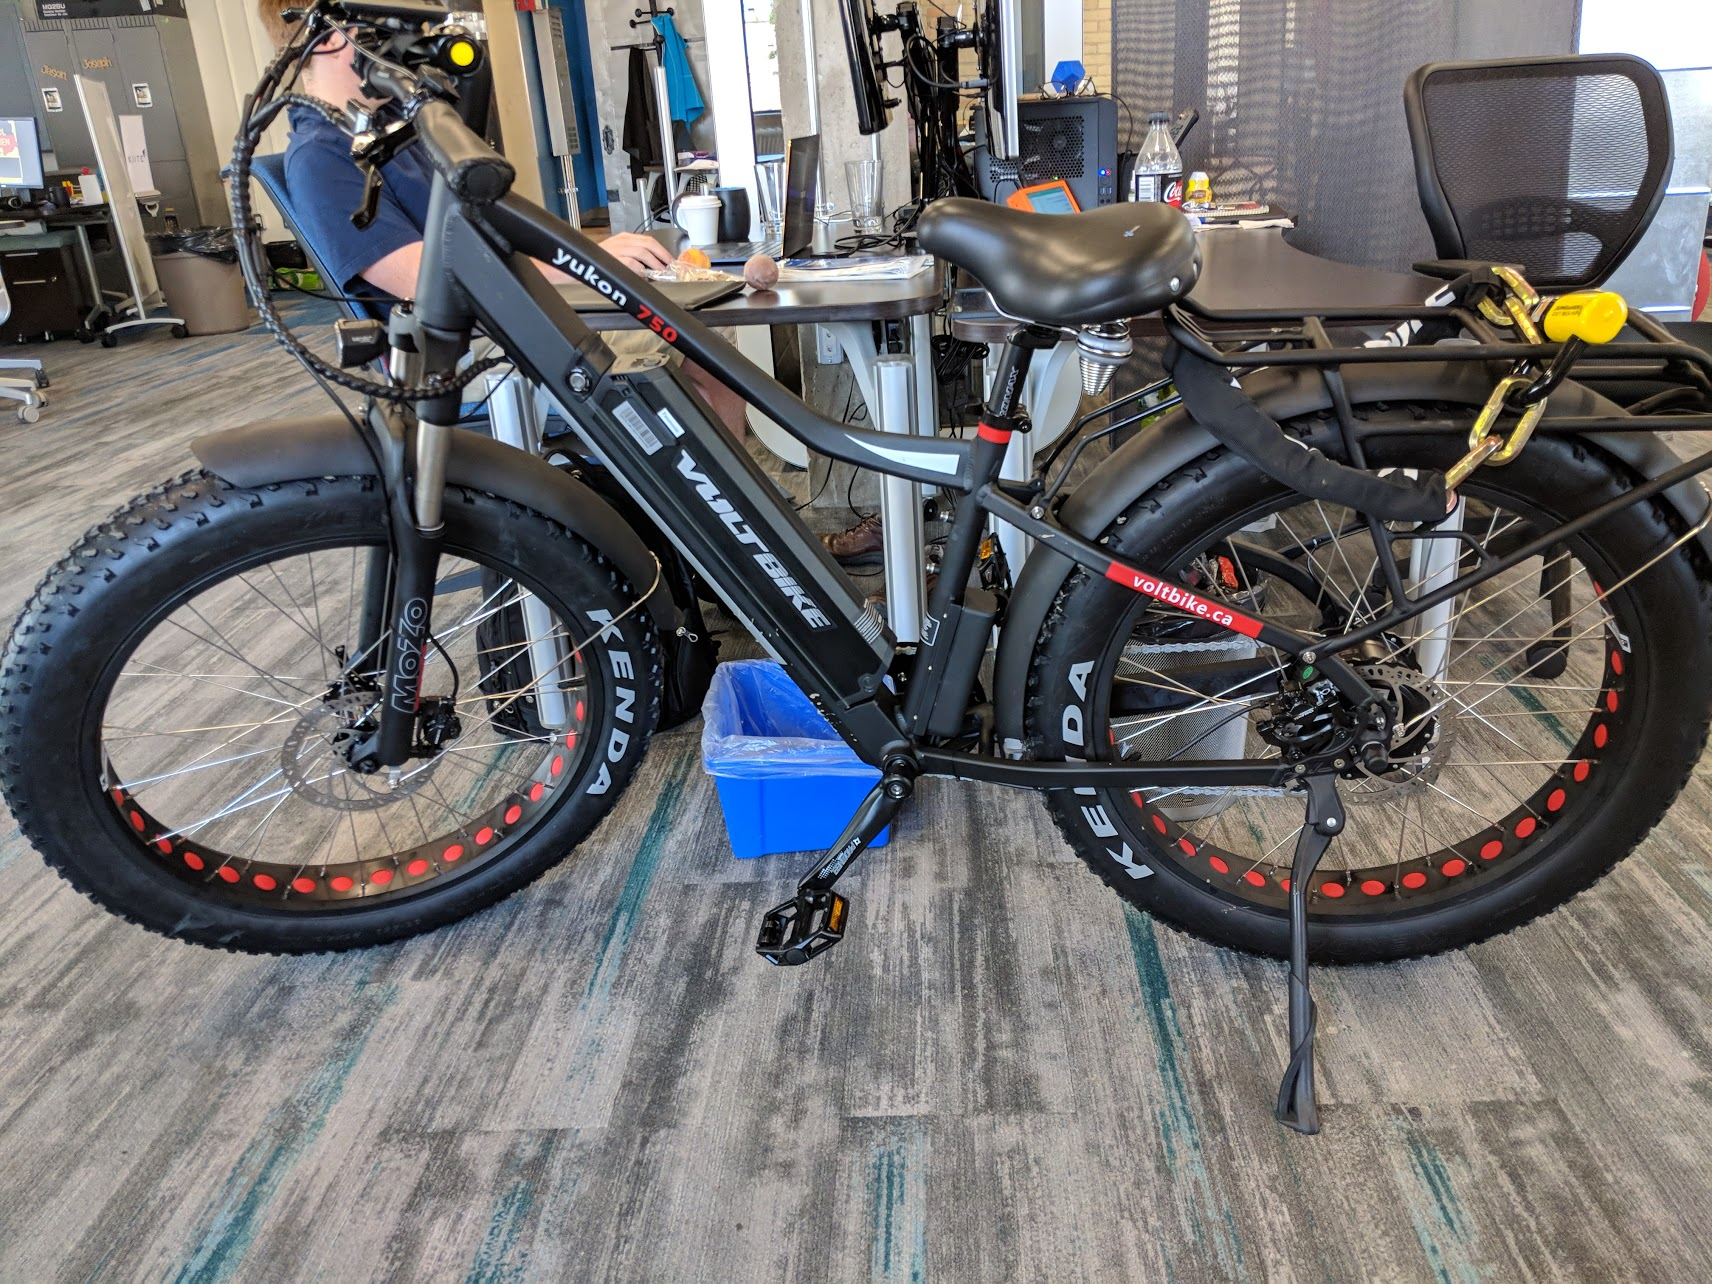 Bike v3 has arrived. Should we bait-bike the old one?